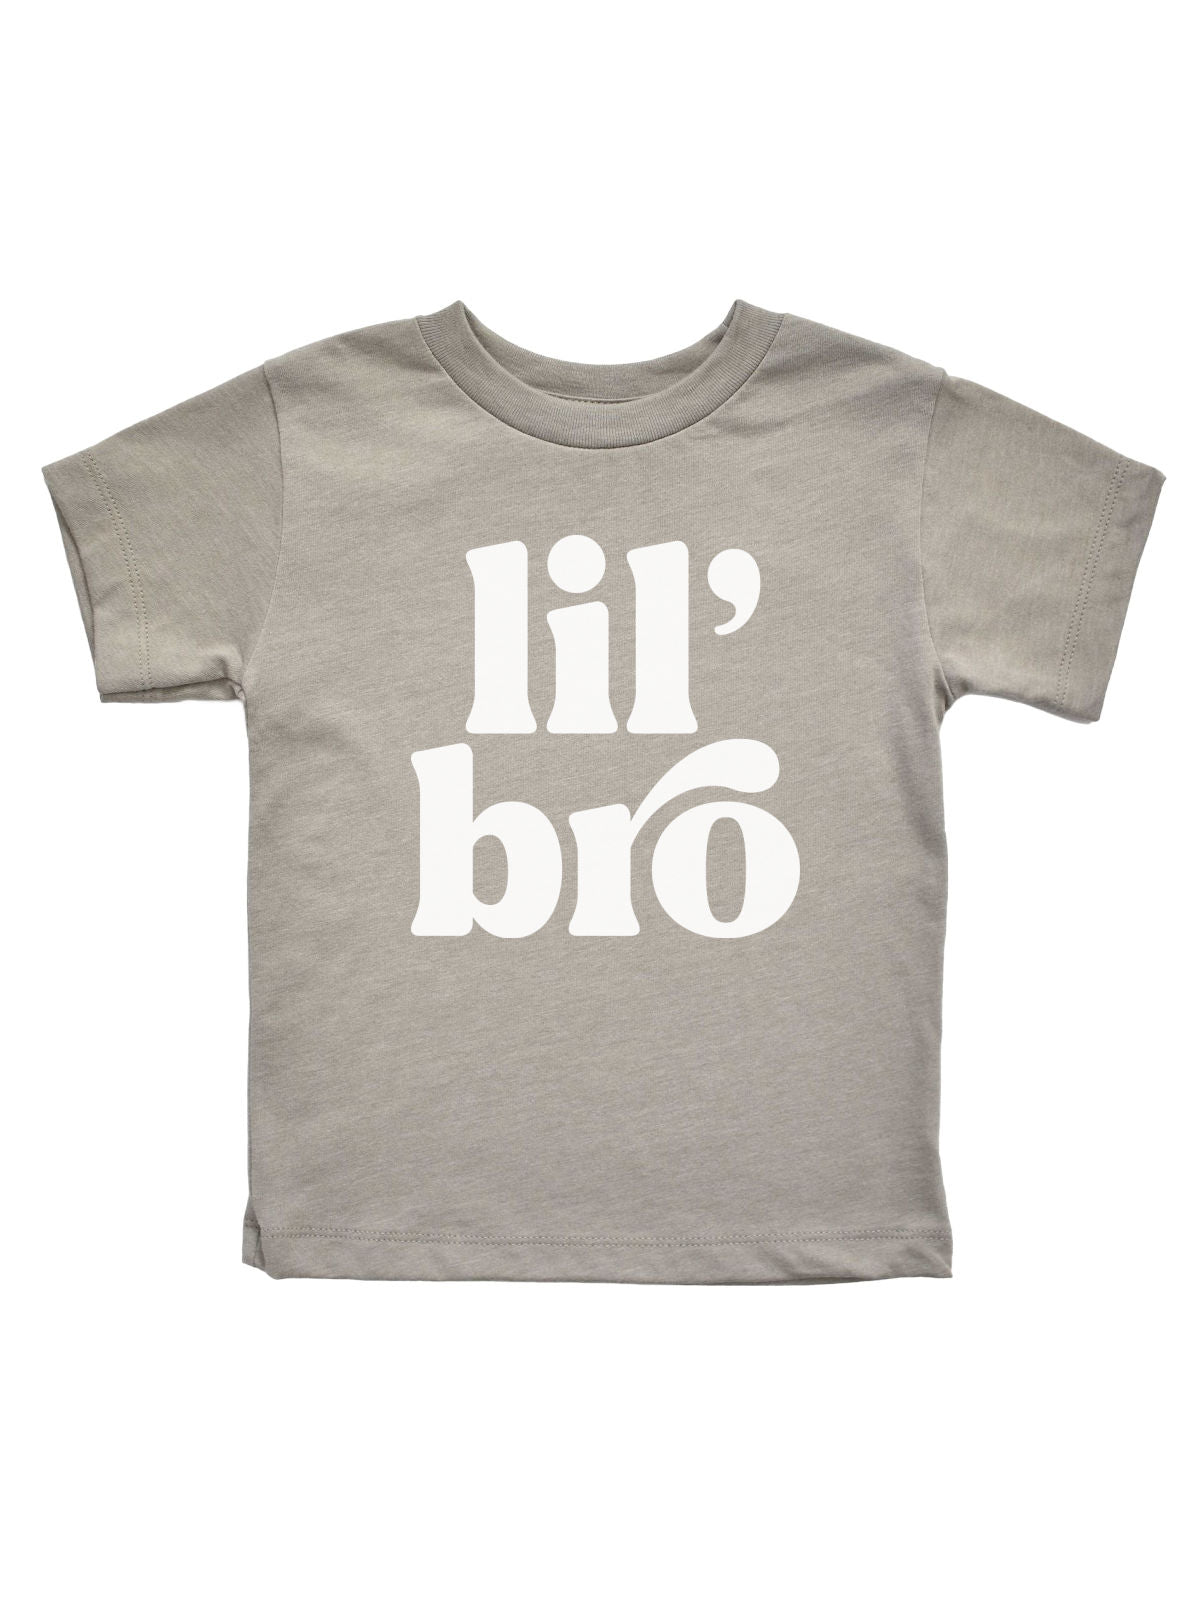 Lil' Bro Baby Boy T-Shirt in Stone